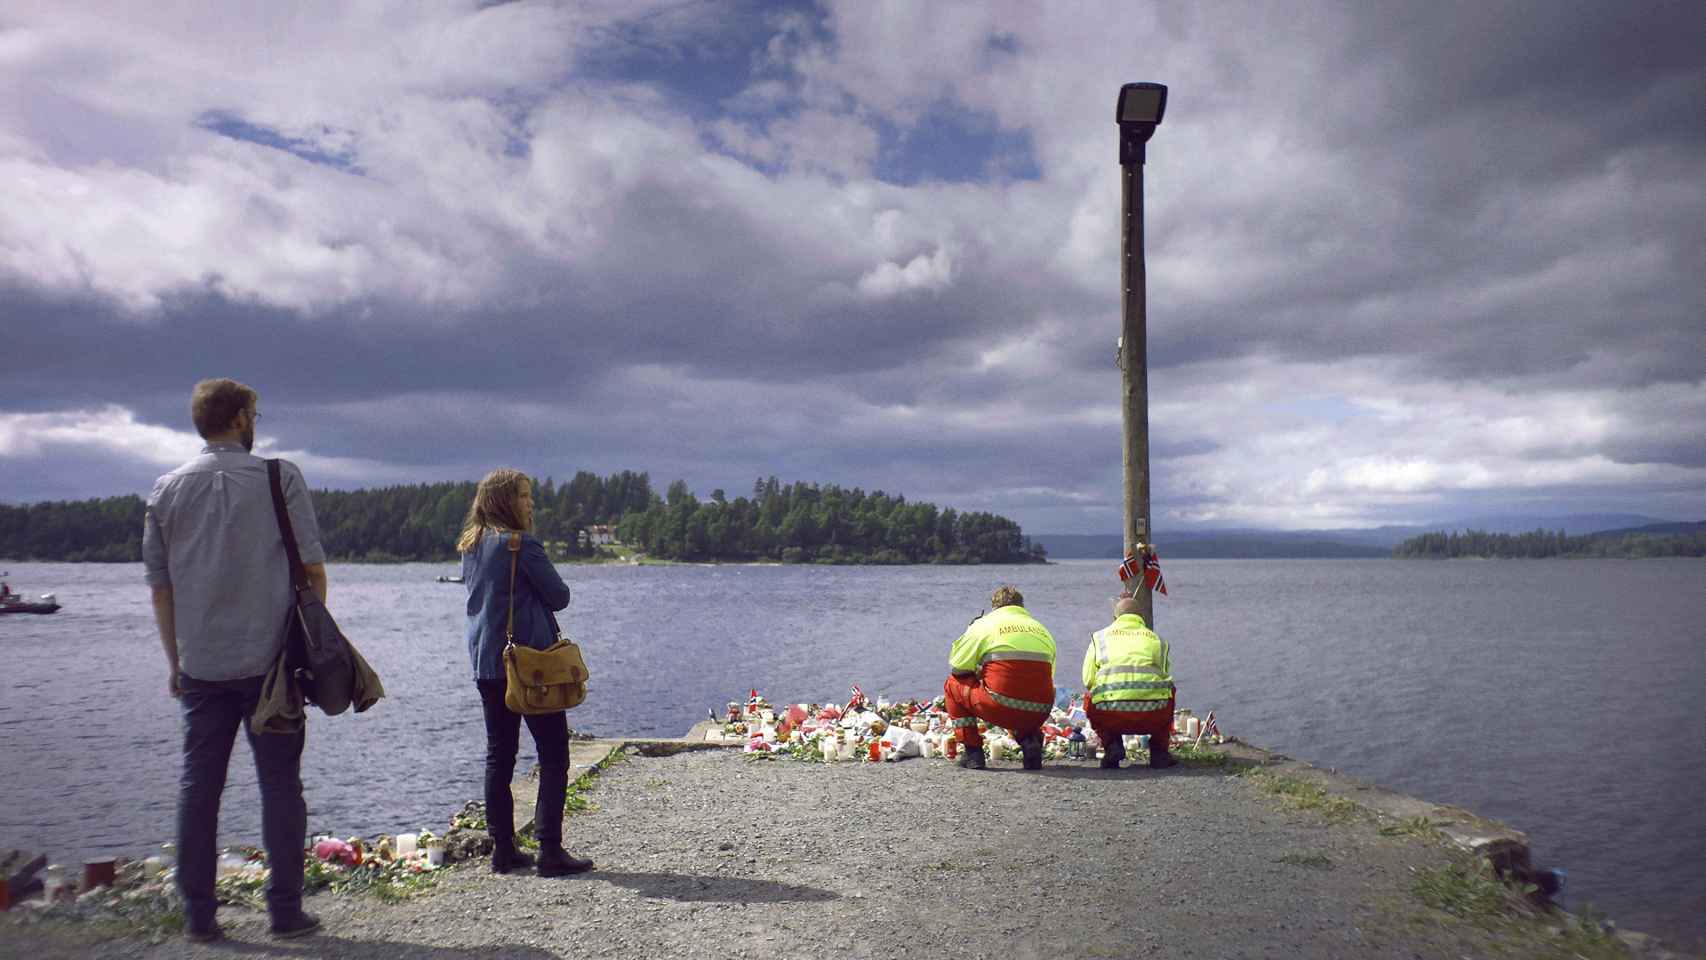 La miniserie de Filmin vuelve a hablar de la tragedia noruega.